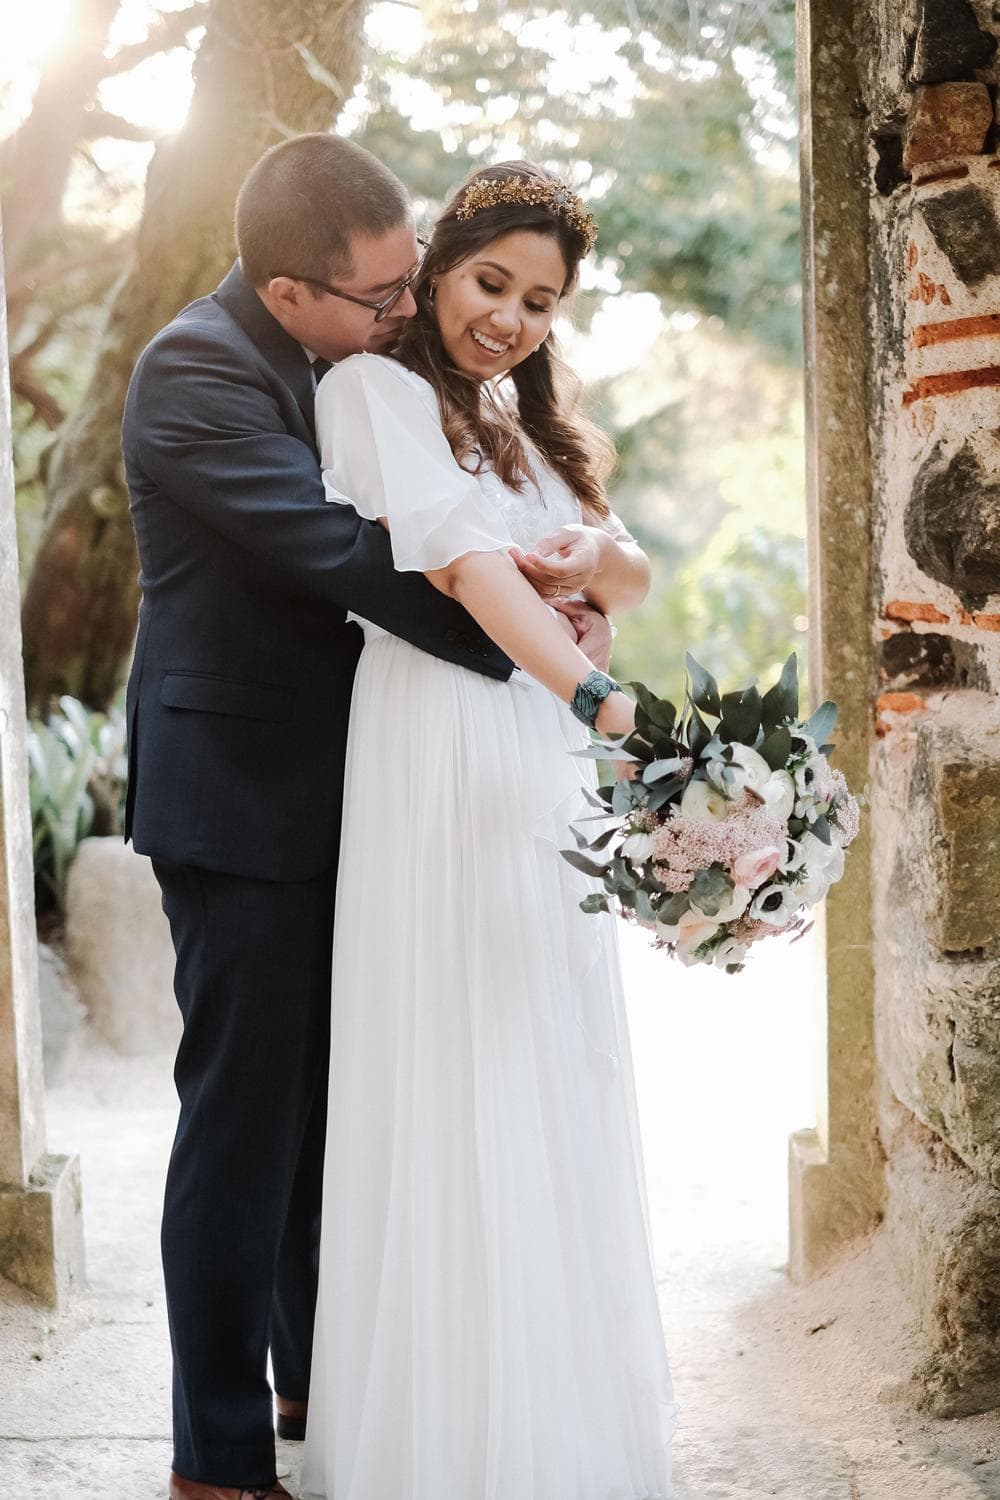 Sintra elopement at Monserrate Palace #sintrawedding #outdoorwedding #sintraelopement #portugalphotographer jesuscaballero.com